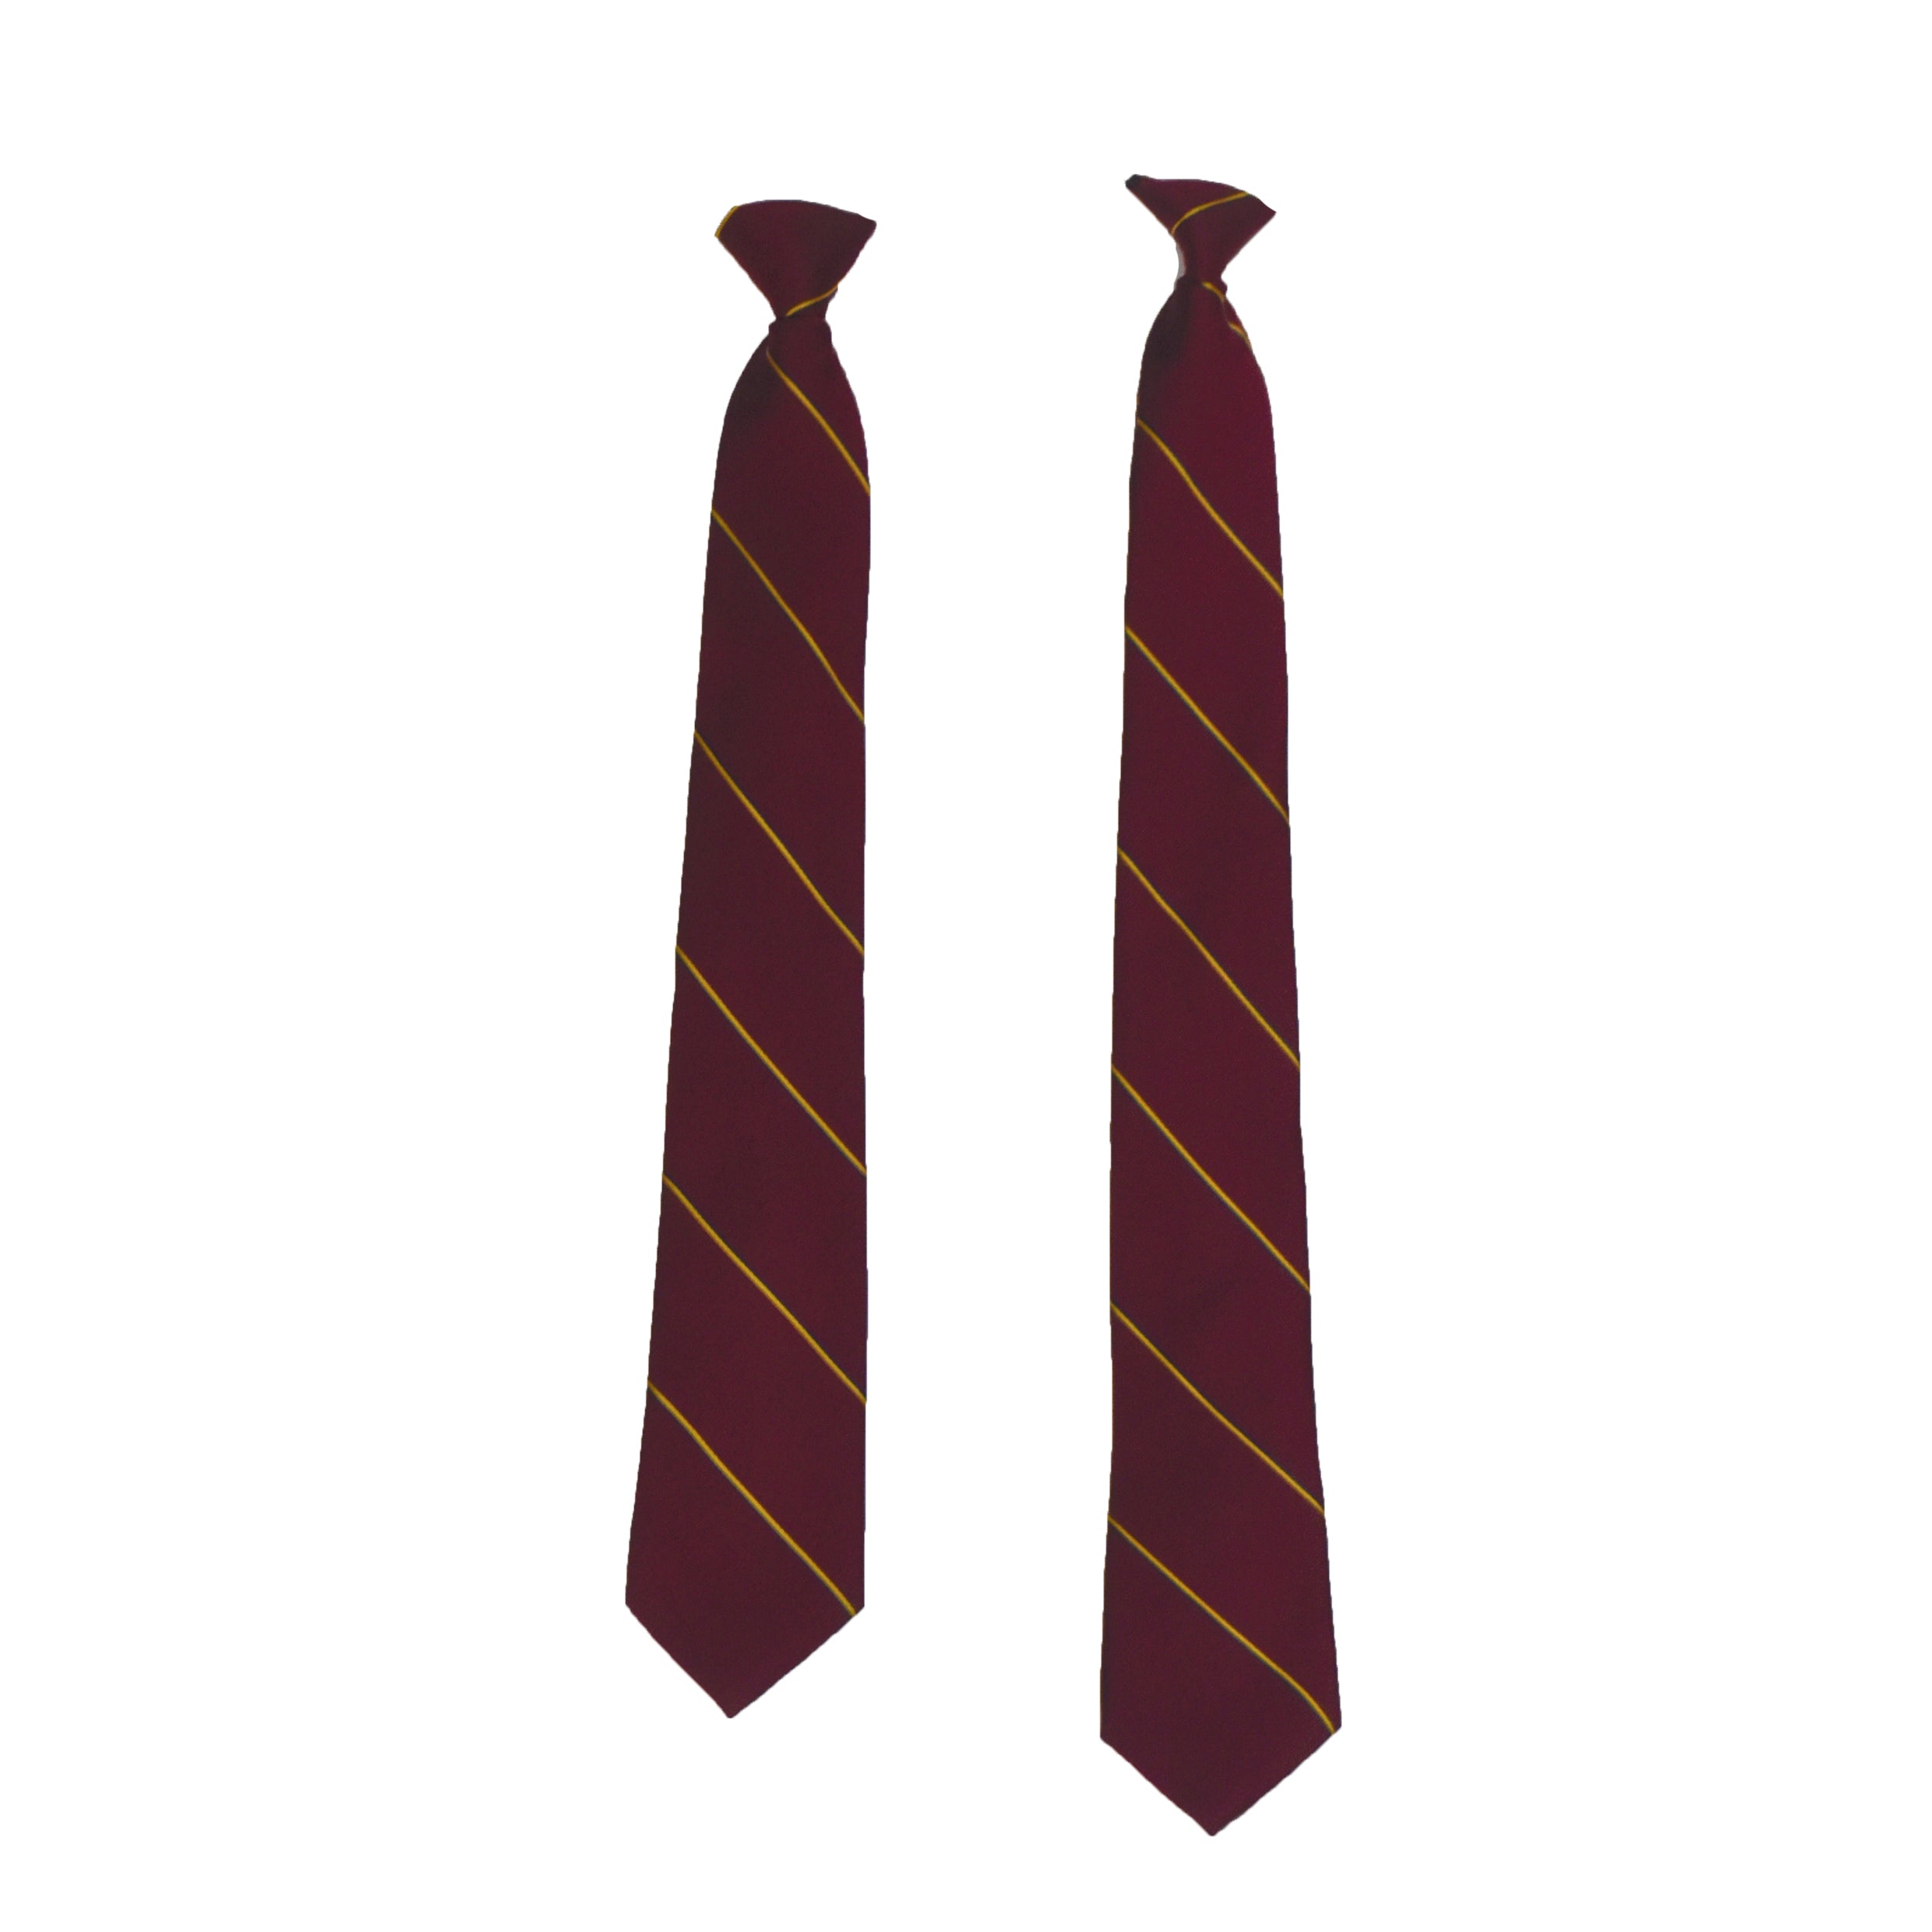 Middle/Senior School Tie